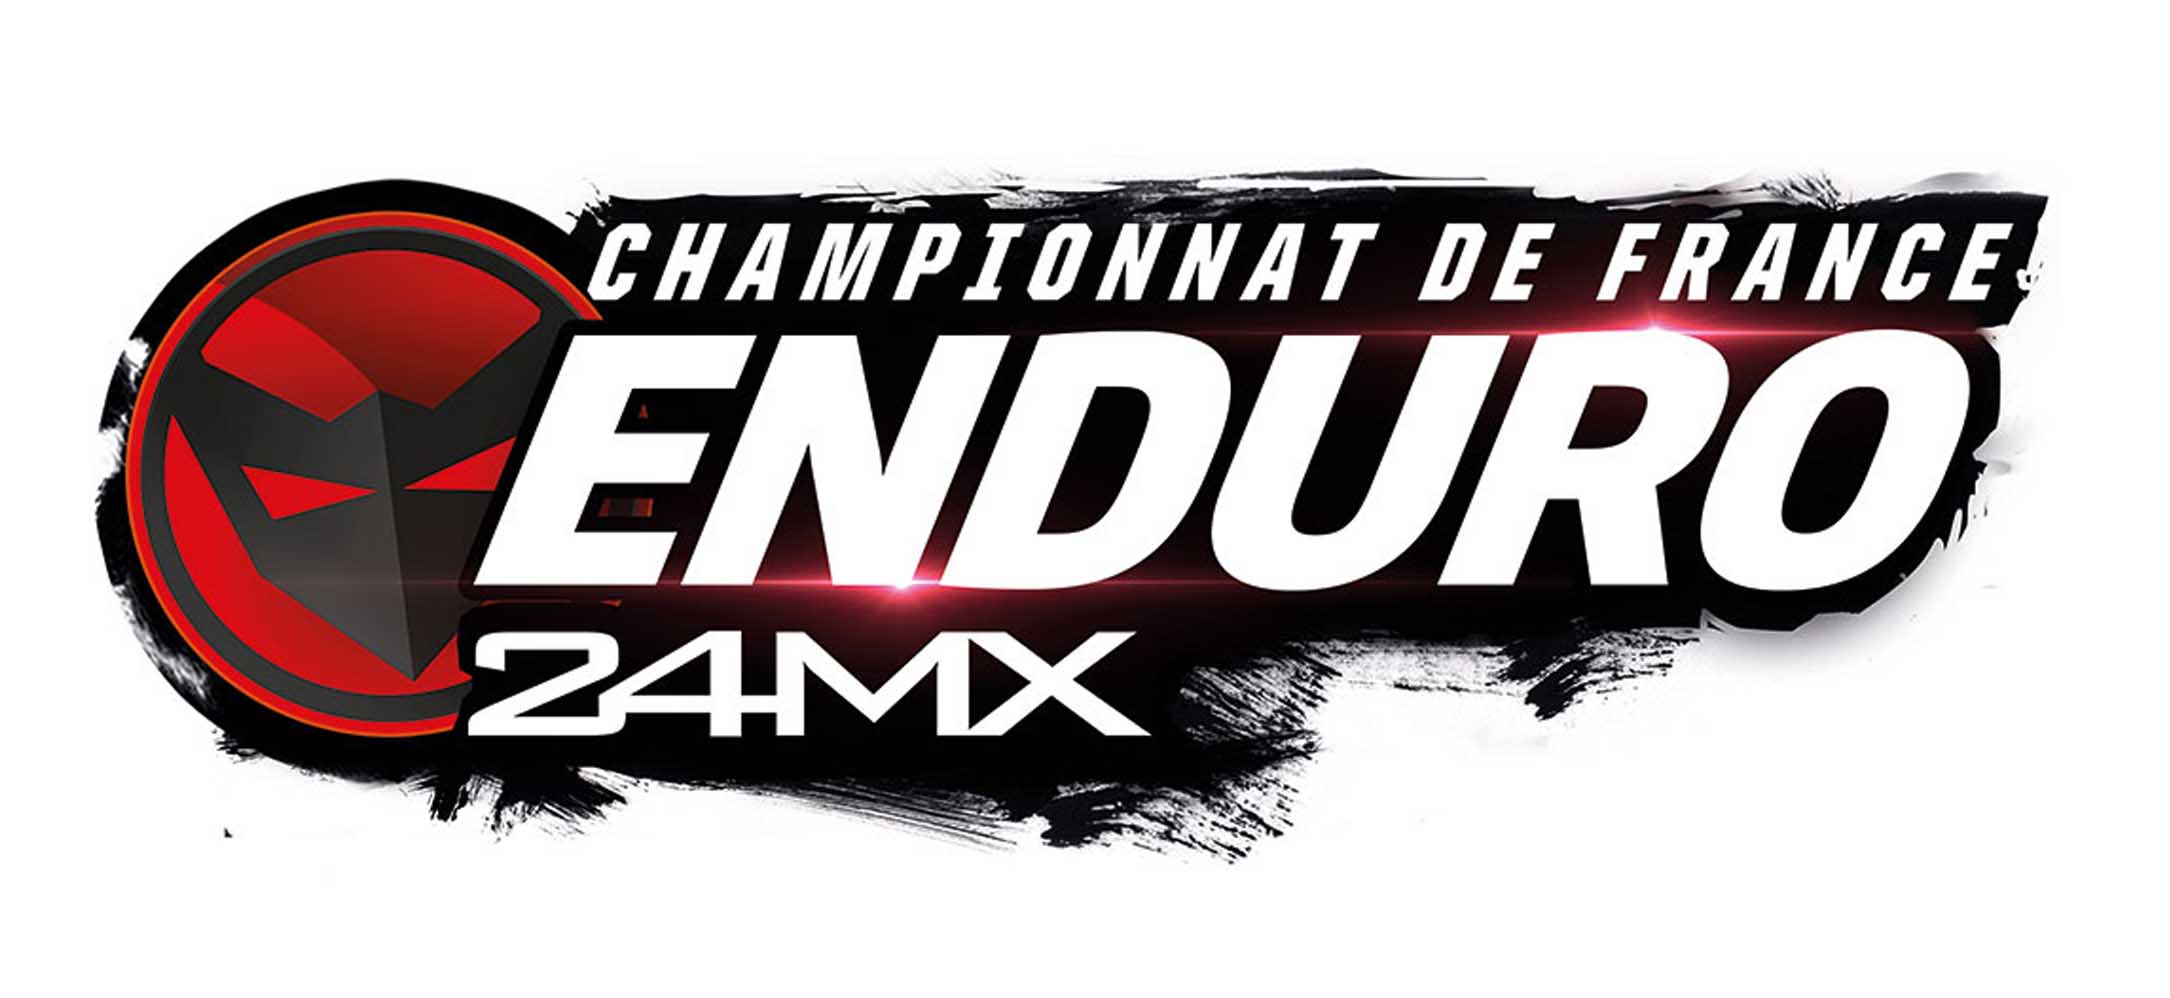 MC GOUDELIN LEMERZER, Championnat de France Enduro 24MX